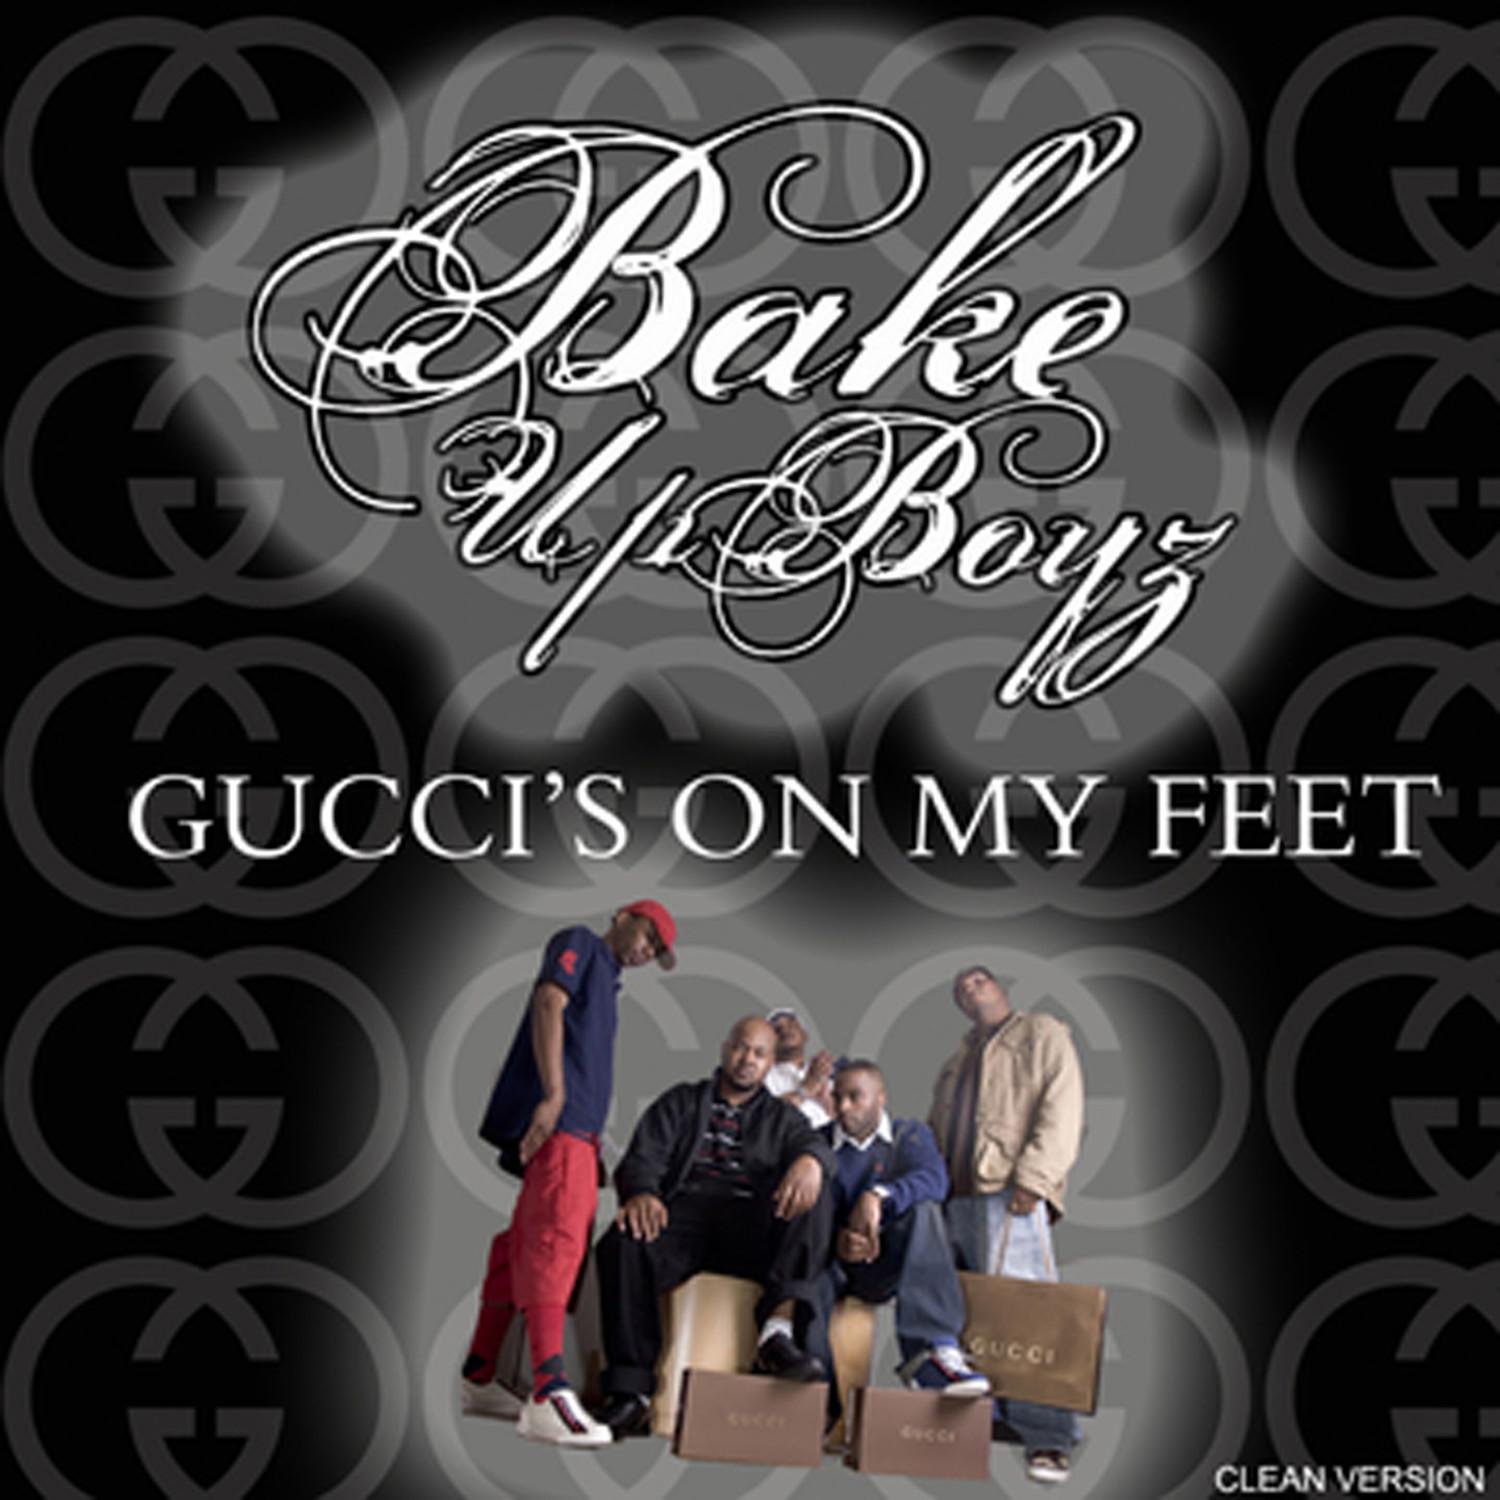 Gucci's on My Feet